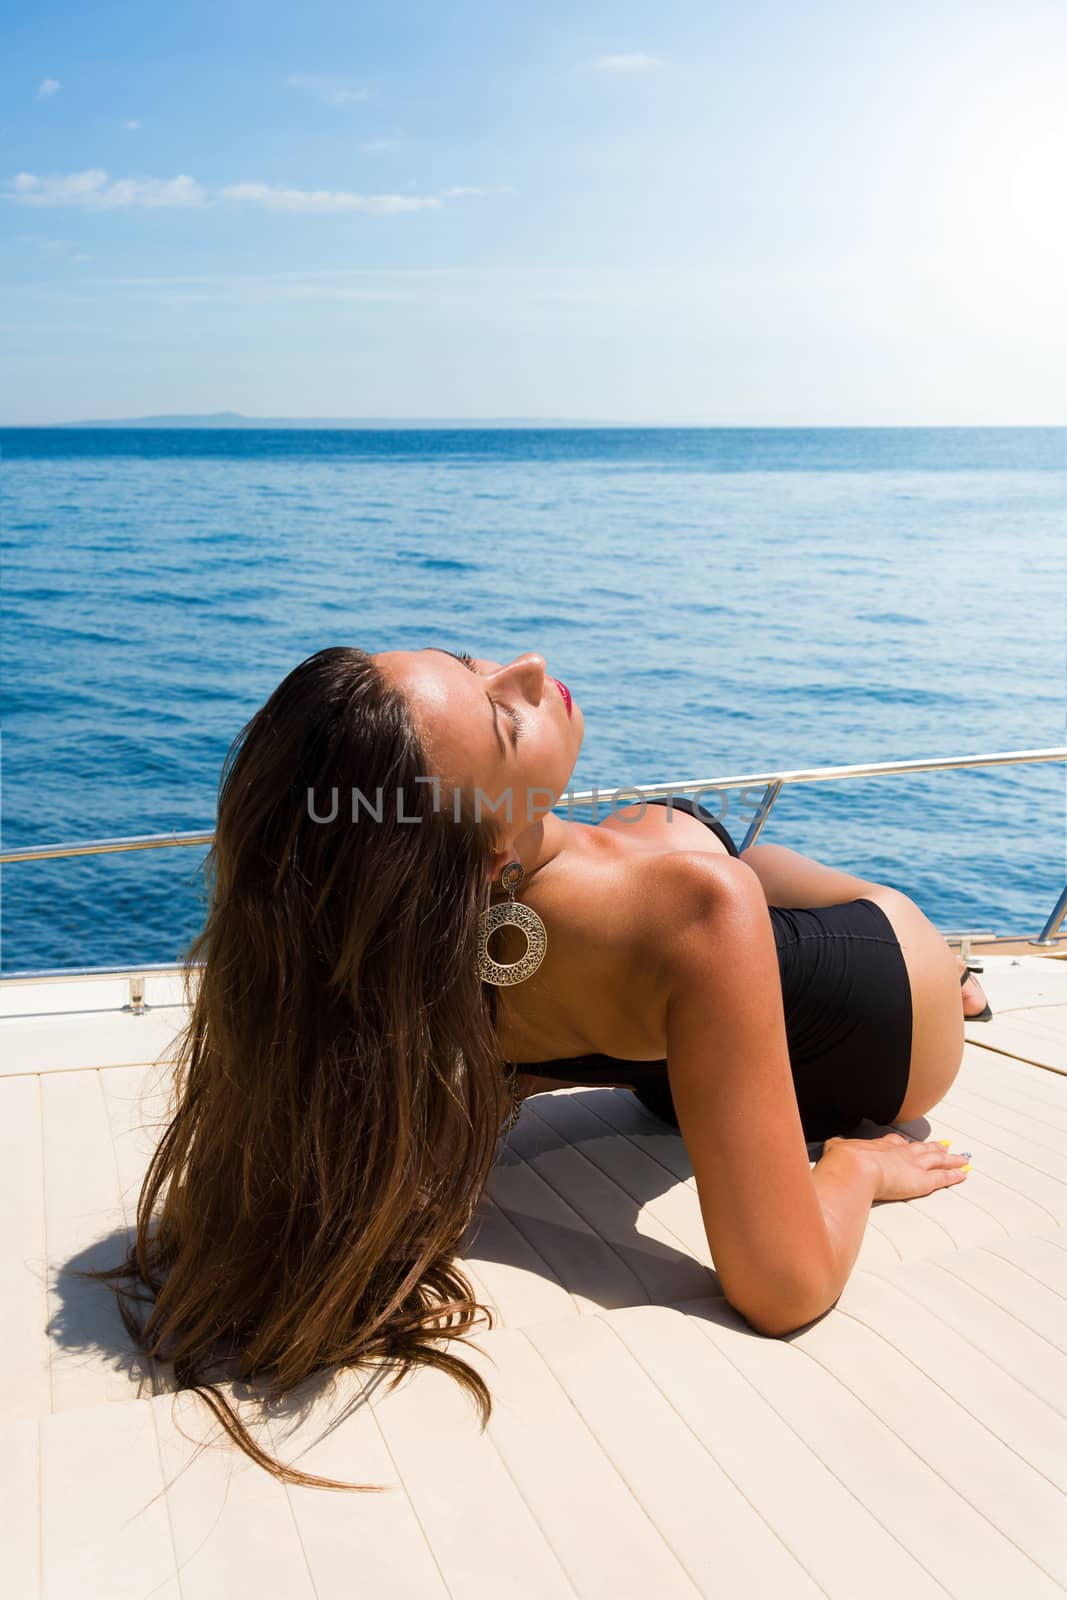 Young woman Sailing  by Netfalls